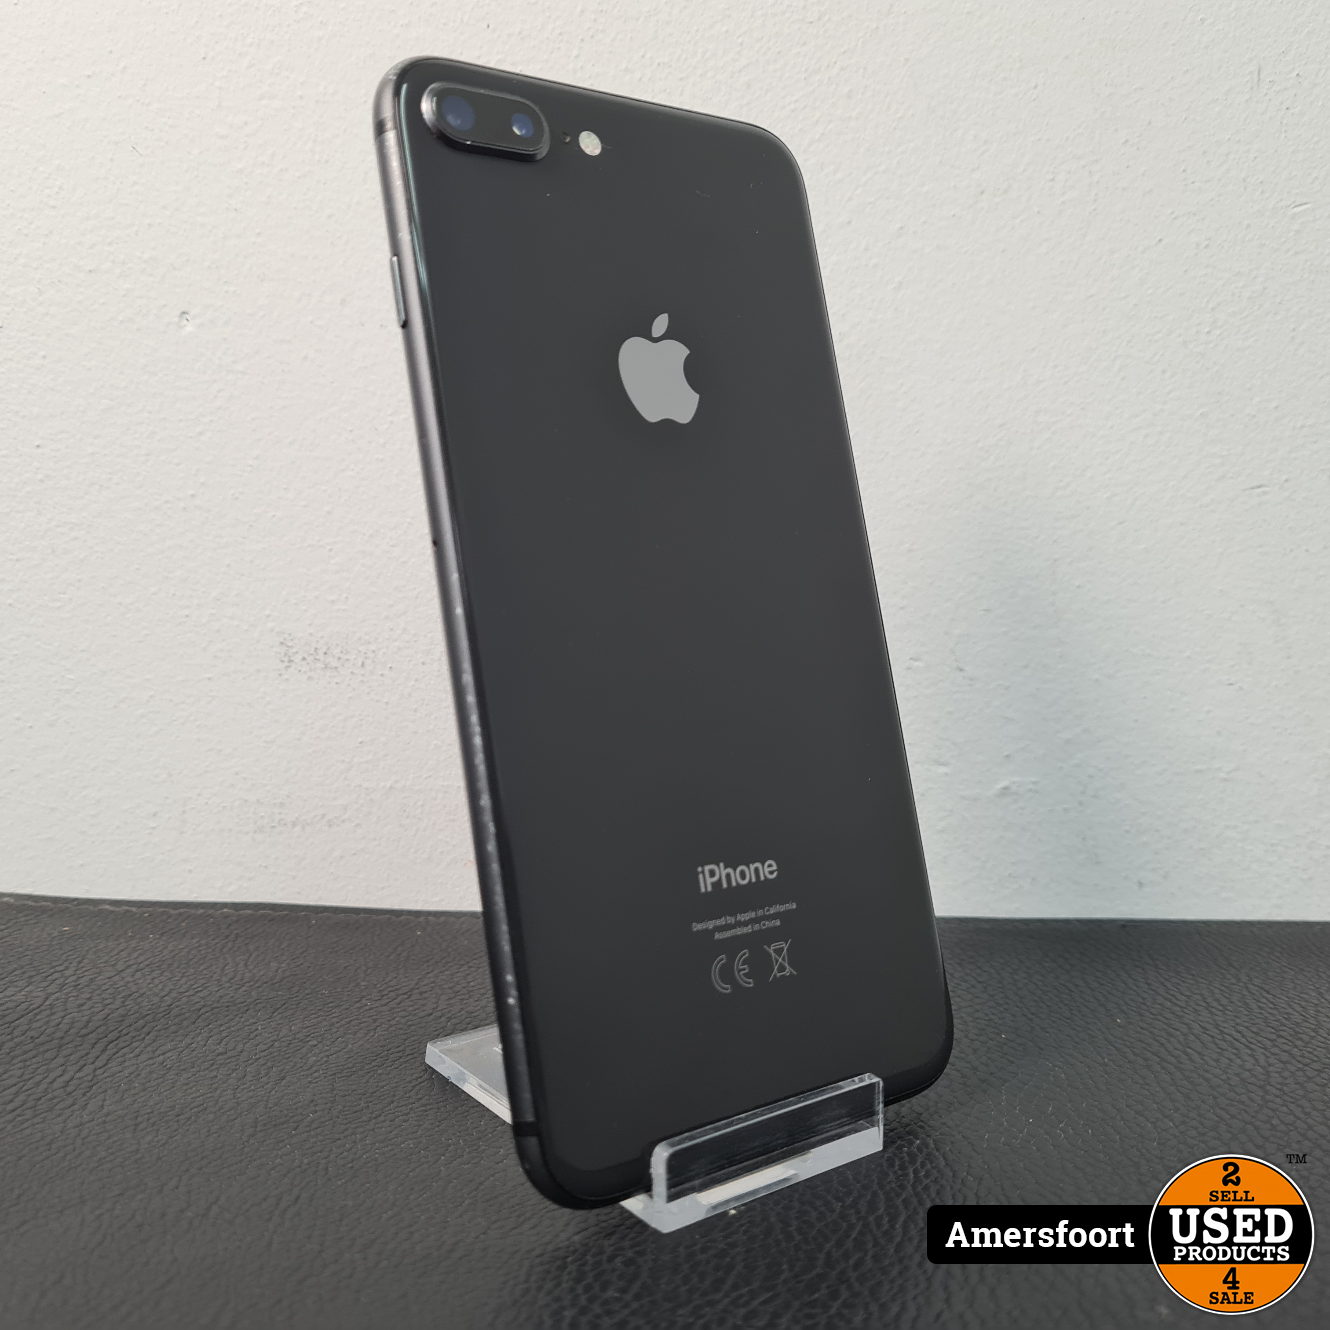 band Groenland Belangrijk nieuws Apple iPhone 8 Plus 64GB | Accu 85% - Used Products Amersfoort